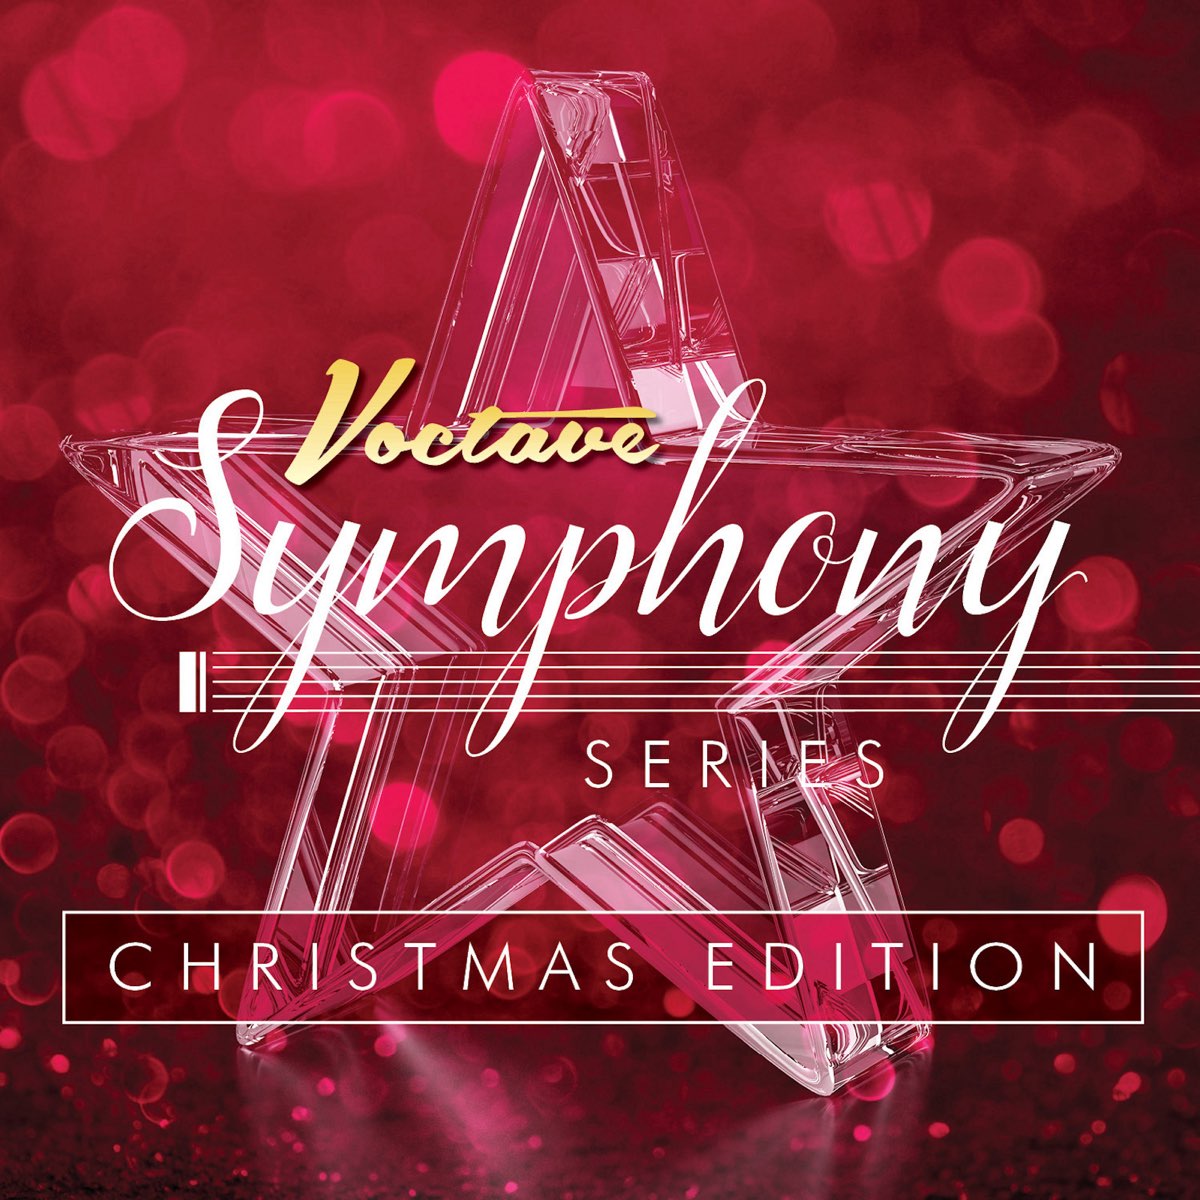 ‎Voctave Symphony Series Christmas Edition EP by Voctave on Apple Music